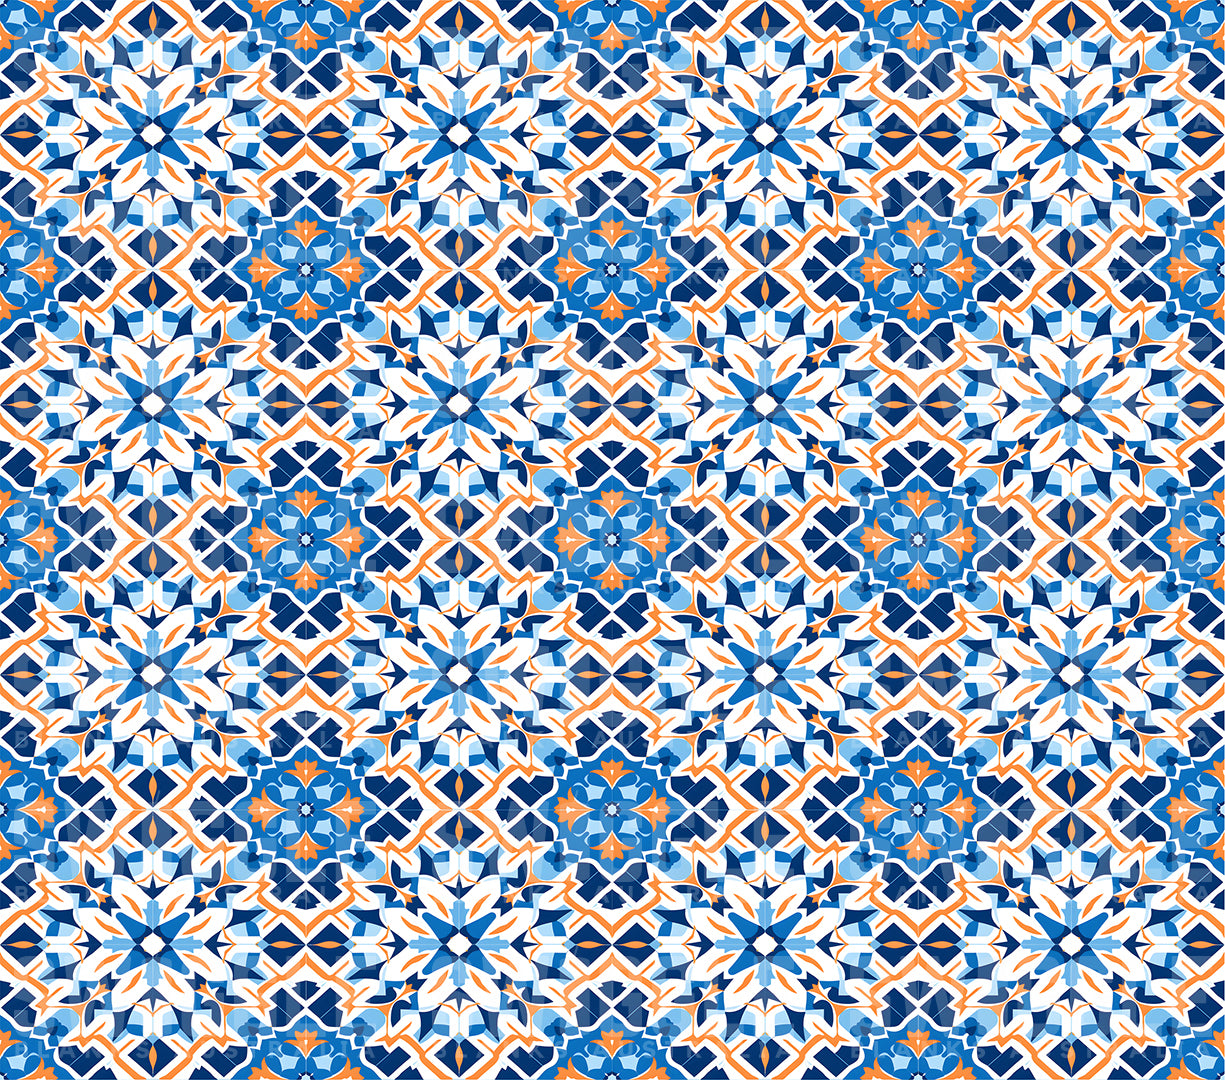 Moroccan Tiles Abstract Print #35 - Digital Download - 20oz Skinny Straight Tumbler Wrap